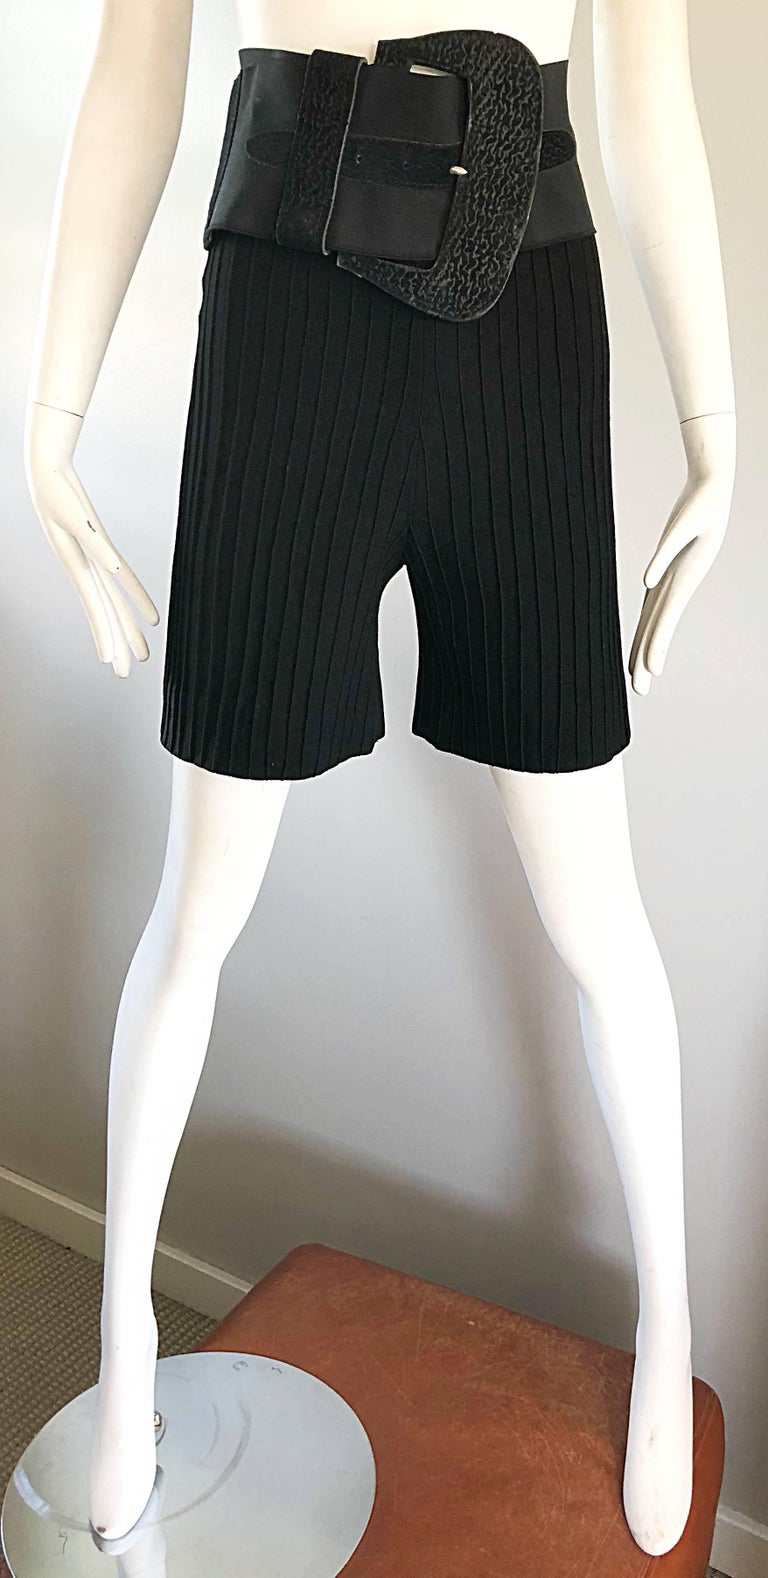 Cardinali Original Sample Black Wool High Waisted 1960s Shorts and Belt